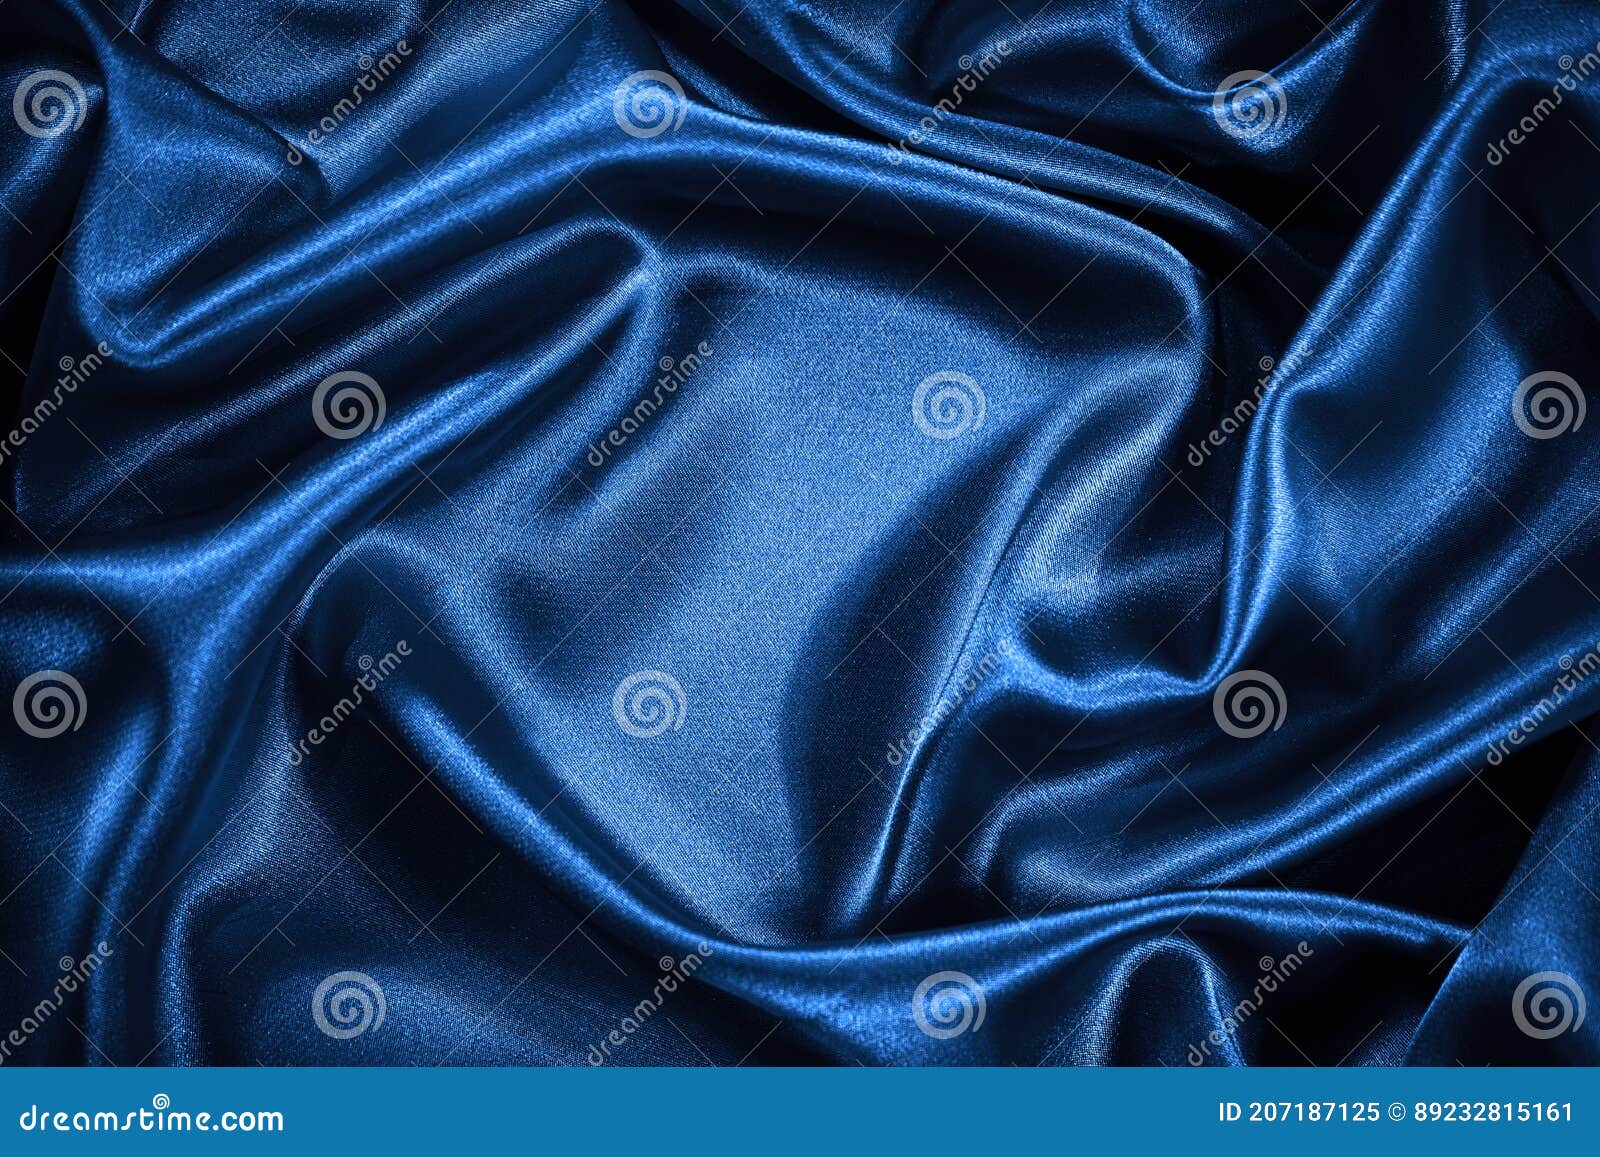 https://thumbs.dreamstime.com/z/black-silk-satin-background-shiny-fabric-wavy-folds-beautiful-fabric-background-empty-space-black-silk-satin-background-207187125.jpg